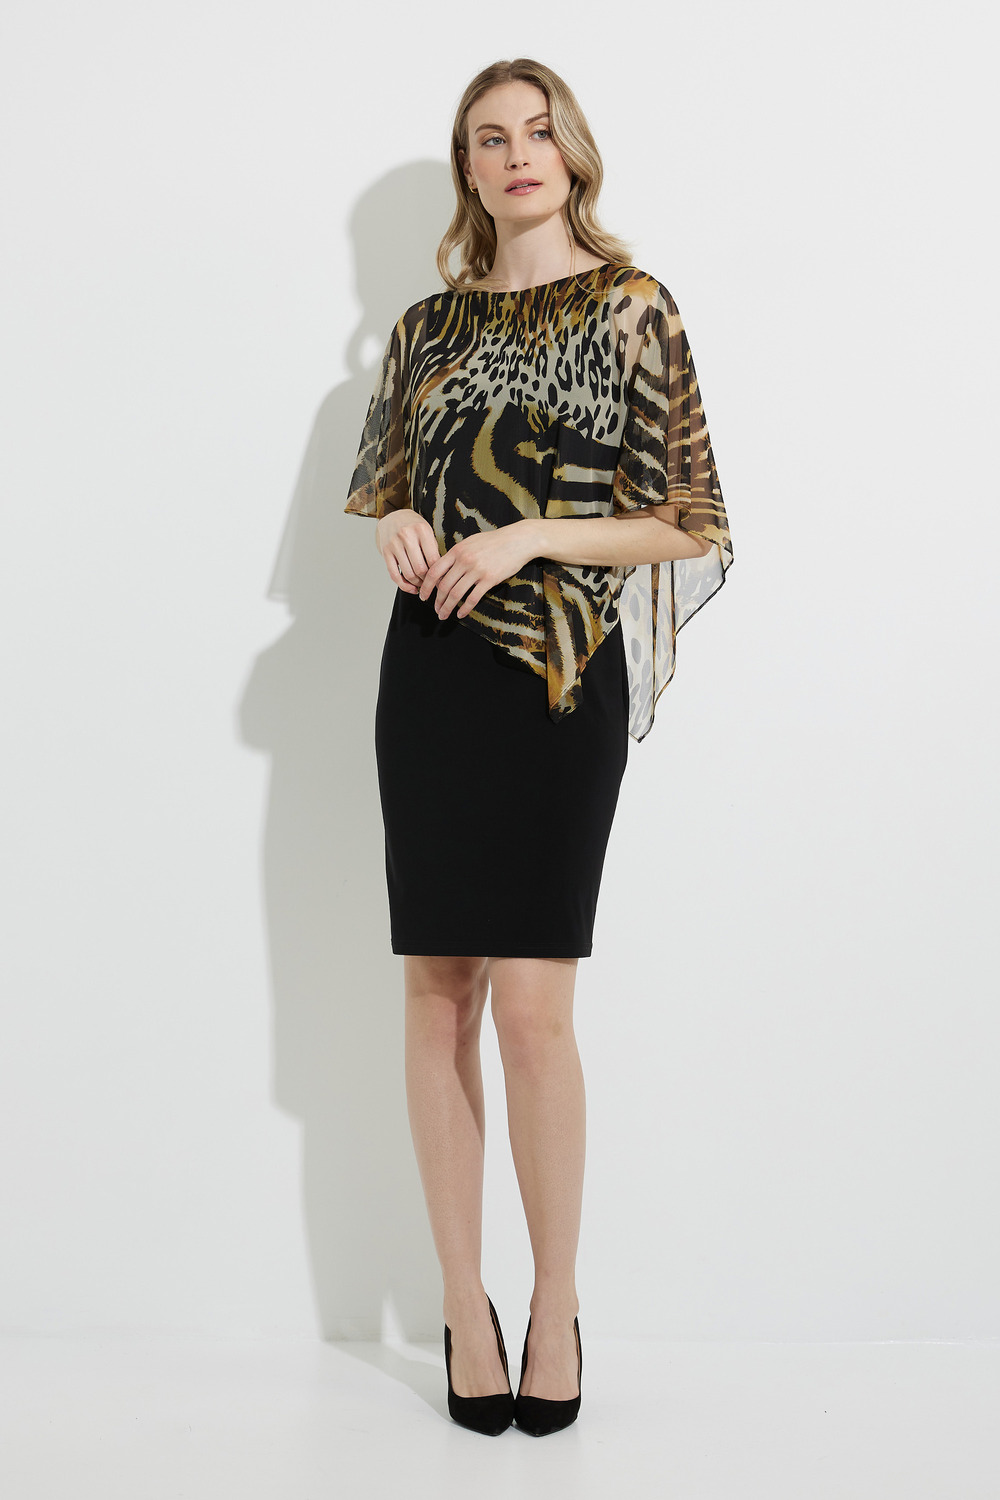 Joseph Ribkoff Animal Print Dress Style 224173. Beige/black